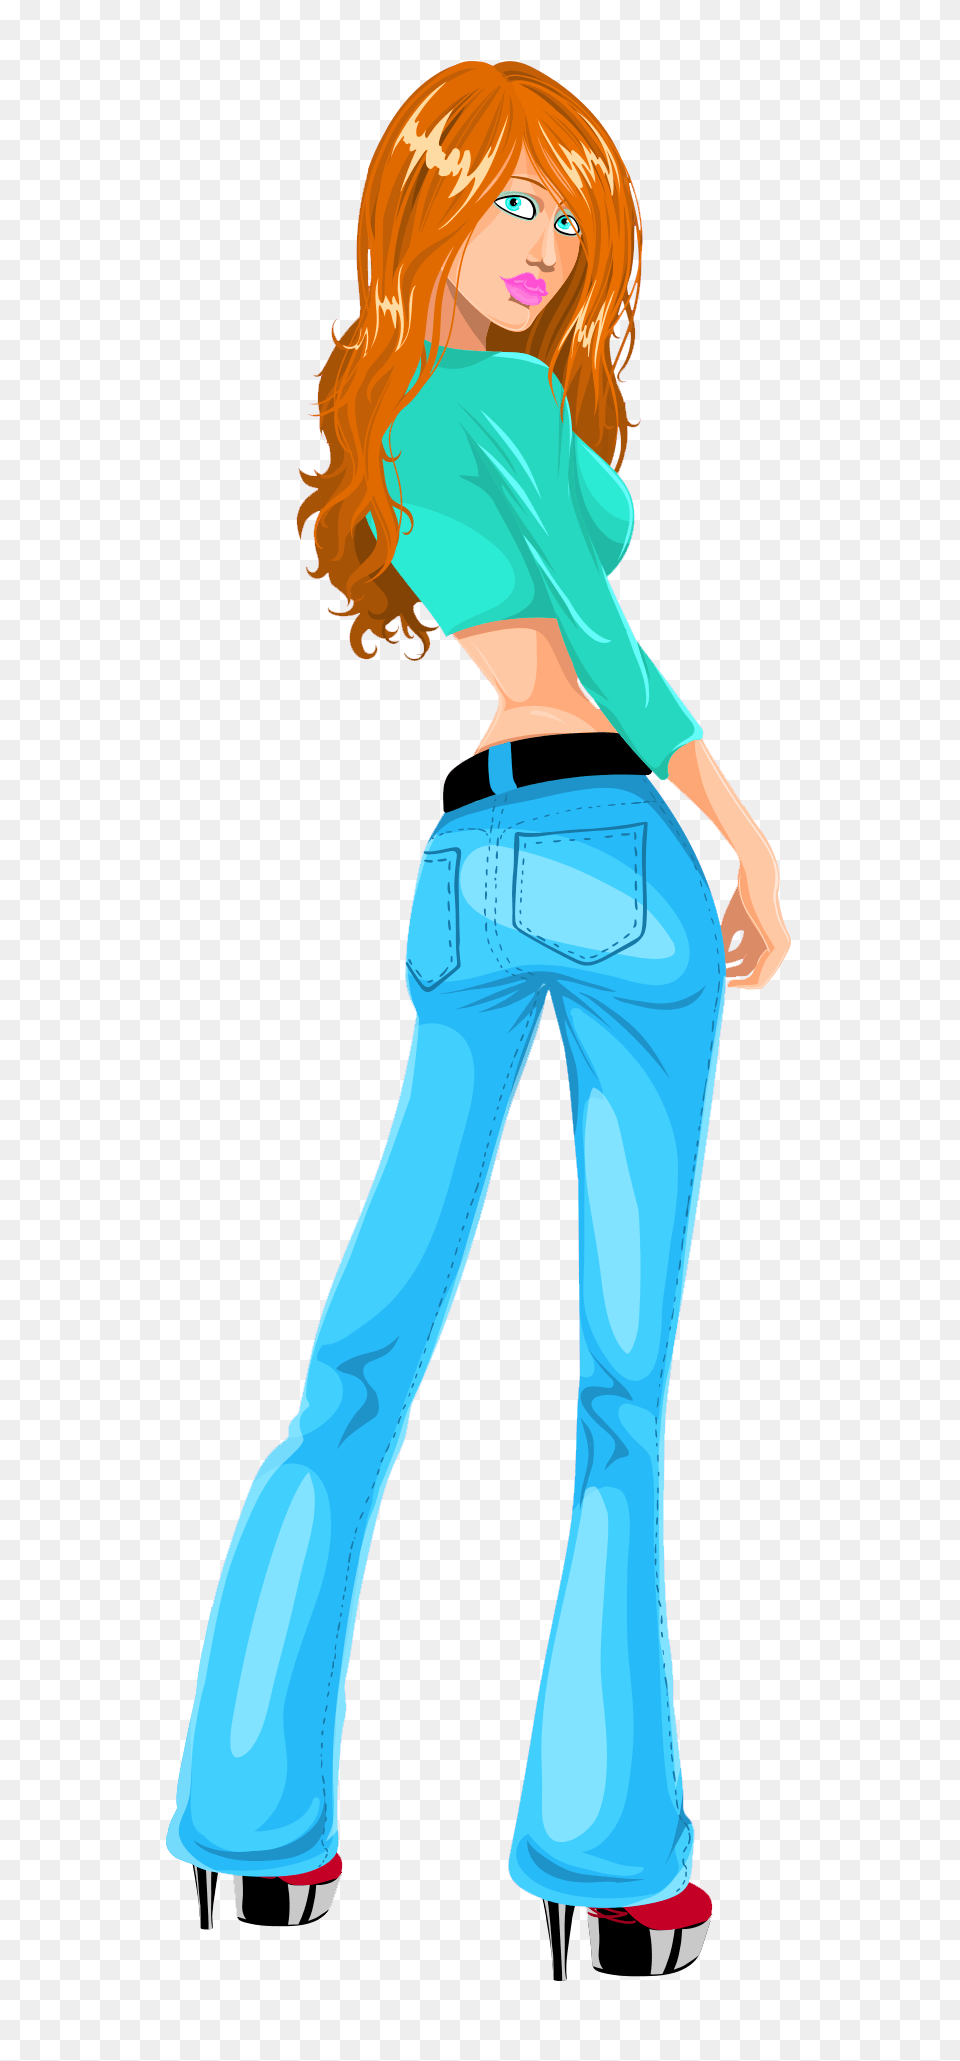 Pngpix Com Girl Standing Vector Transparent Clothing, Pants, Jeans, Teen Png Image